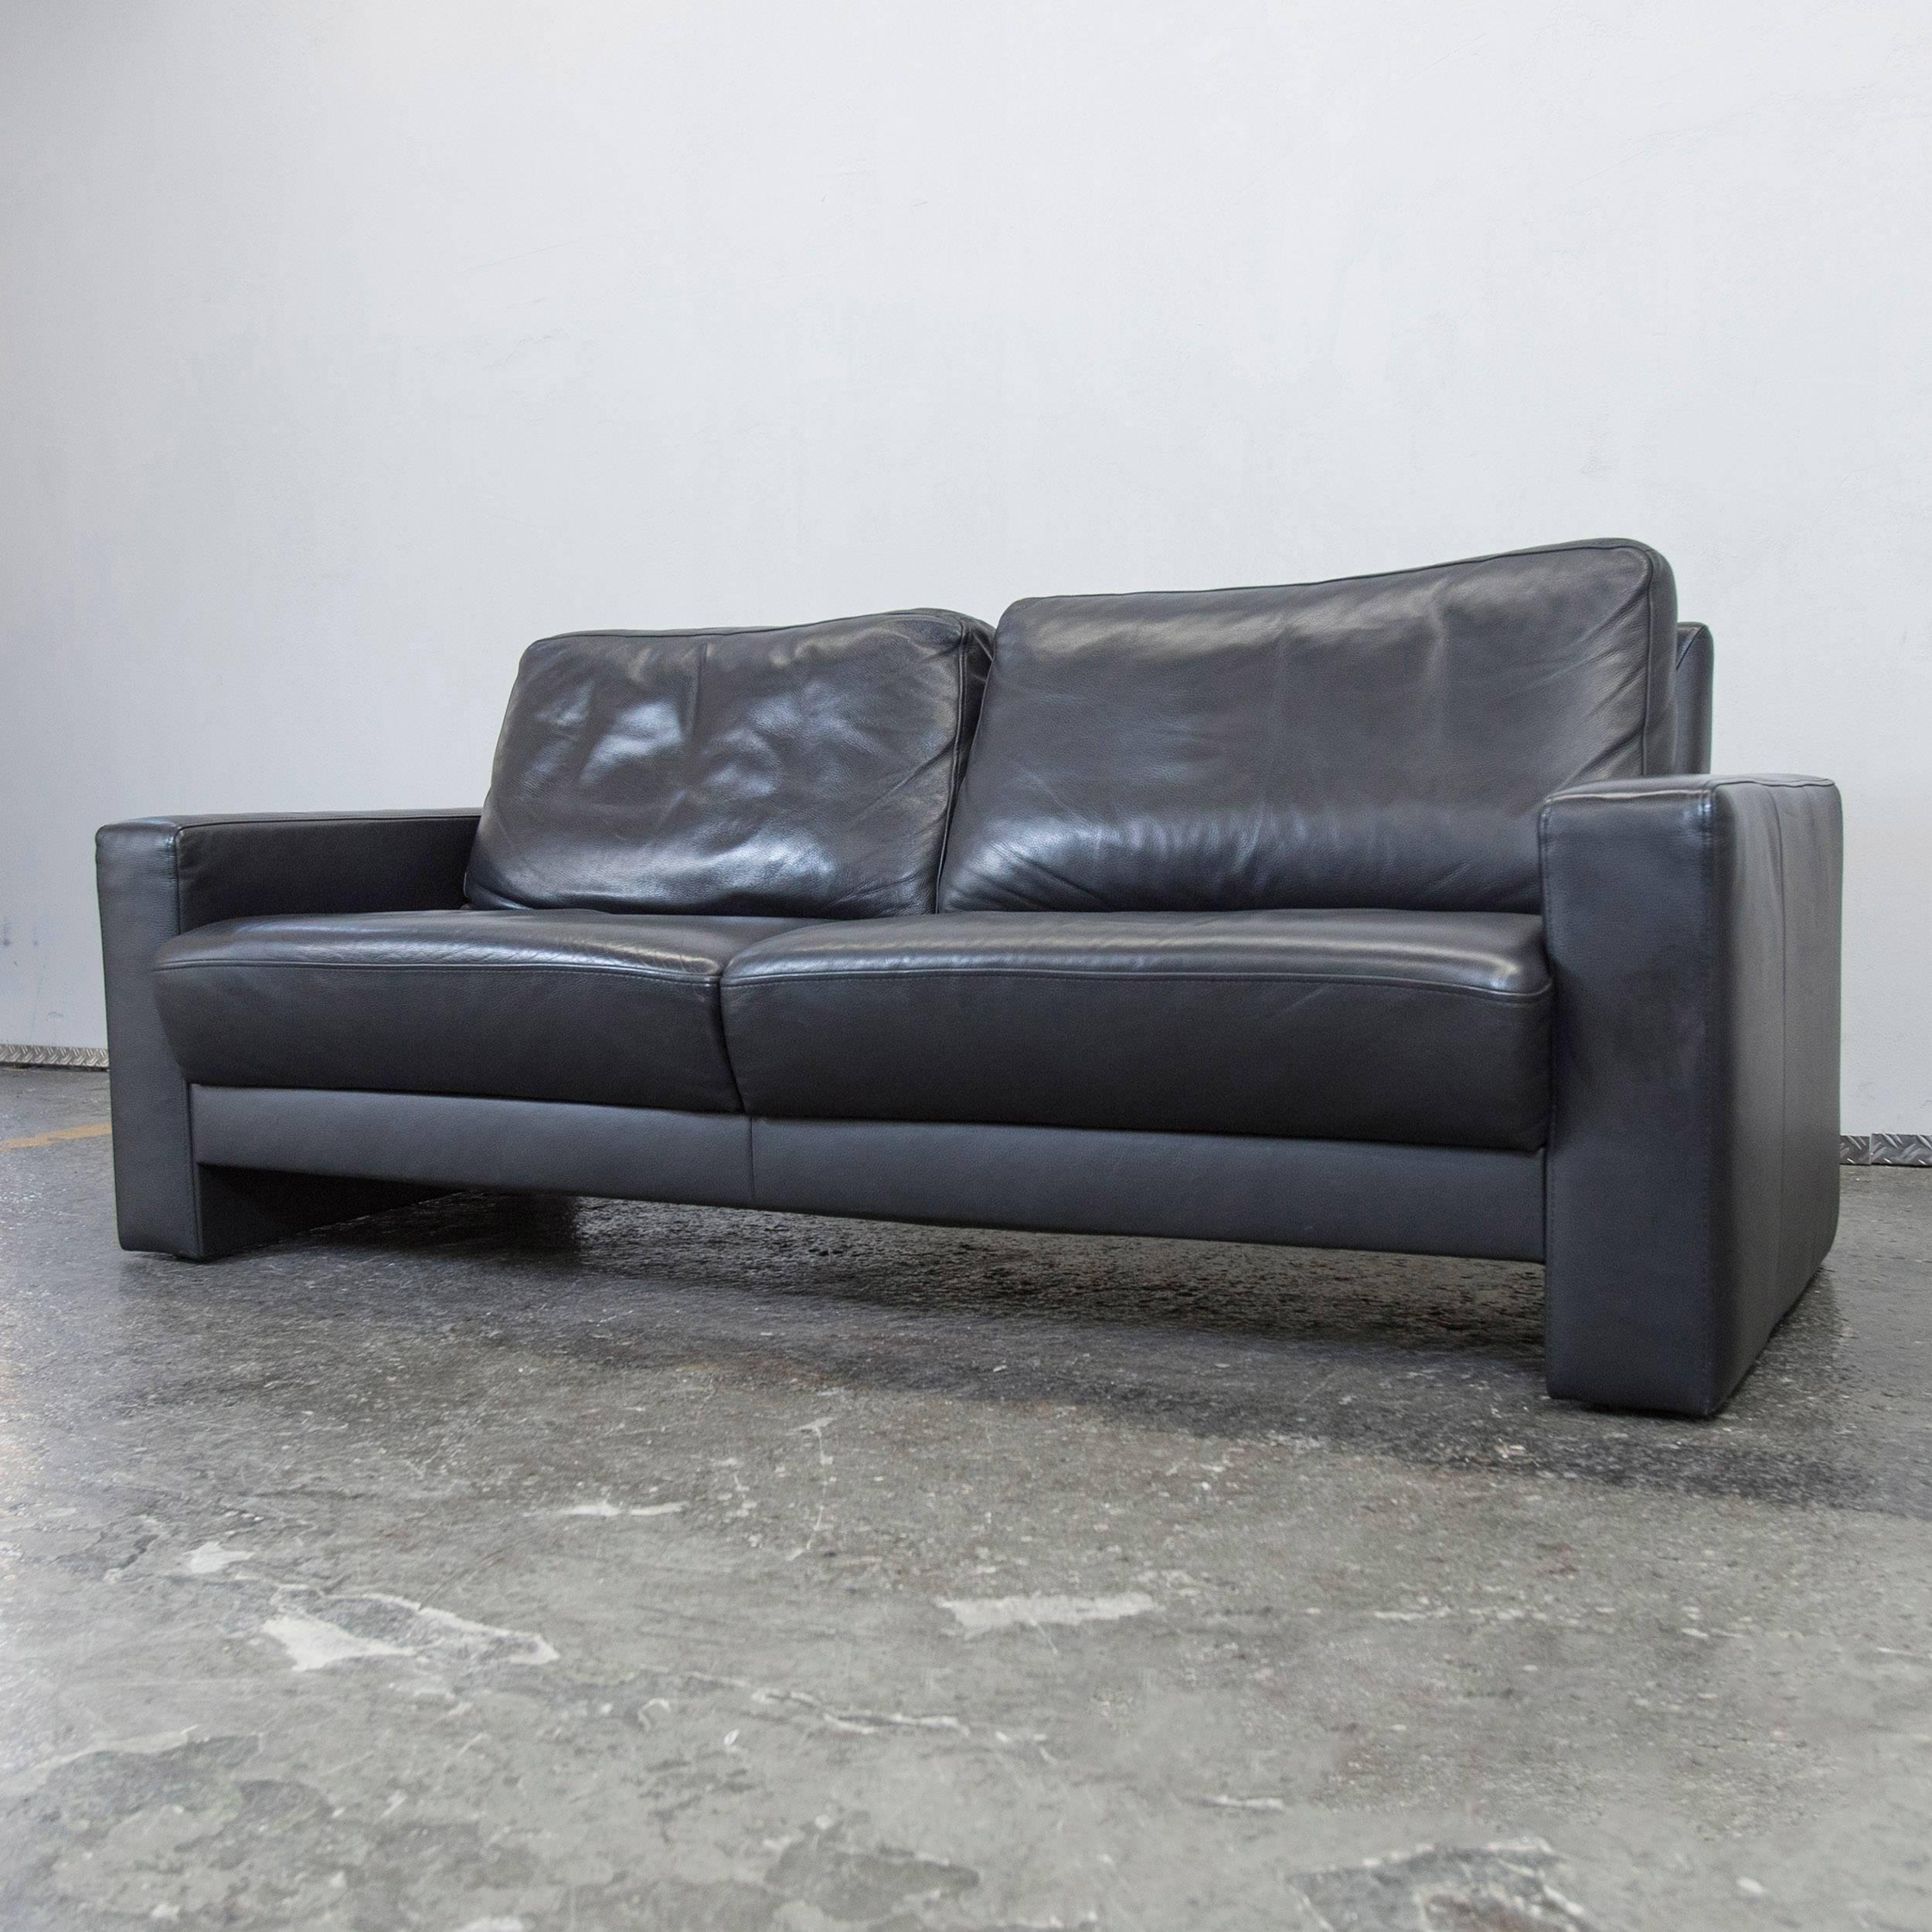 German Külkens & Sohn Designer Leather Sofa Black Three-Seat Couch Modern